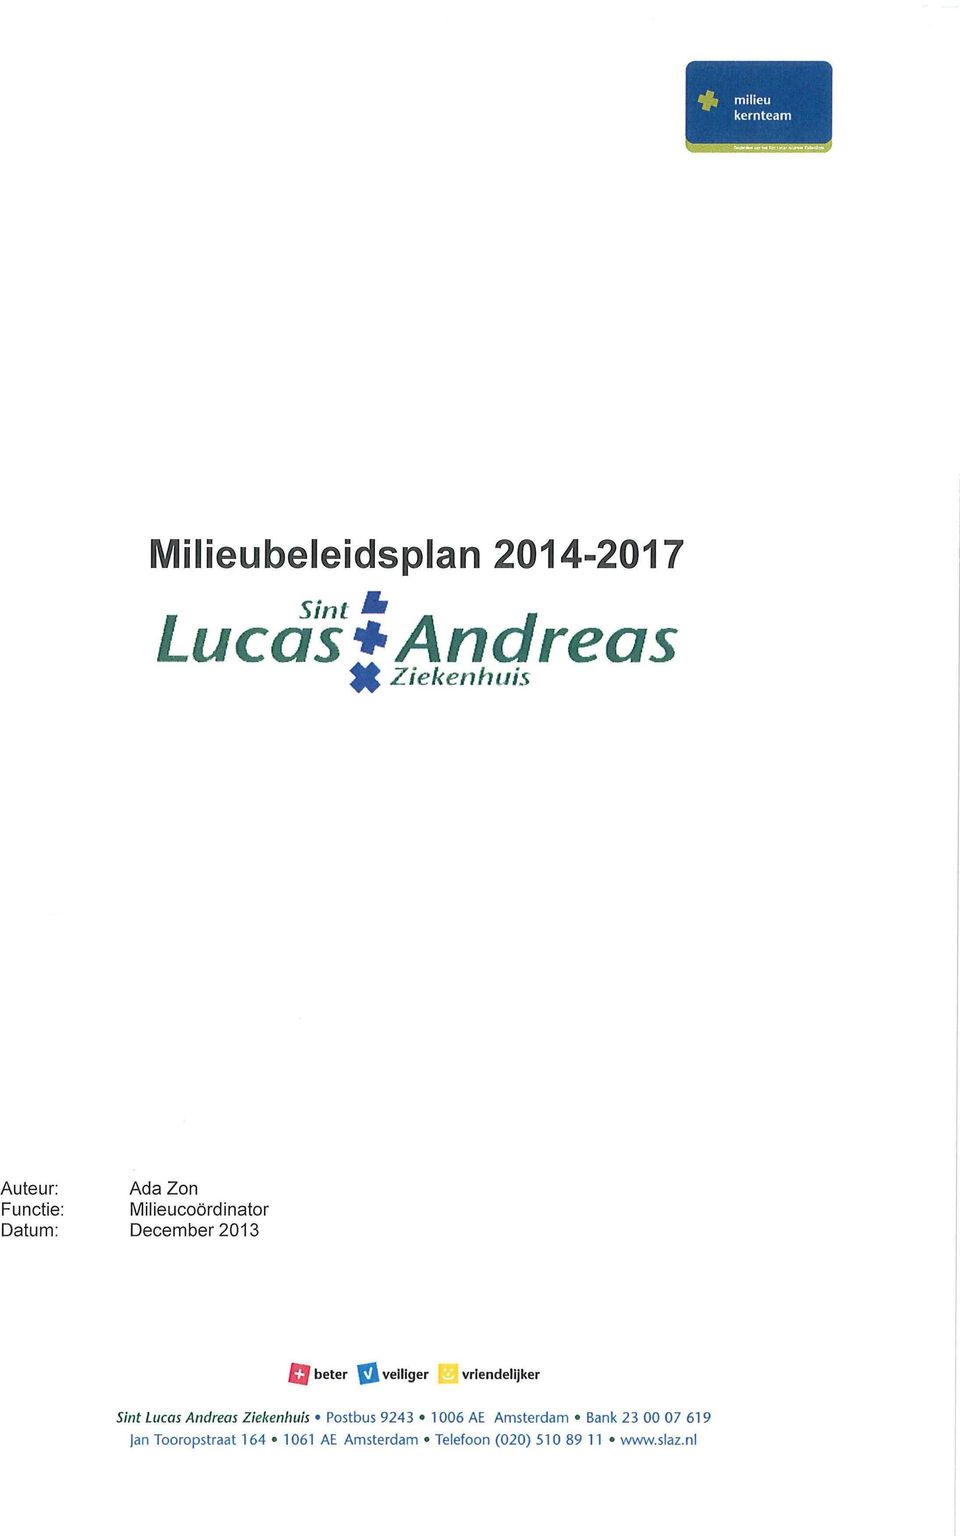 vriendelijker Sint Lucas Andreas Ziel<enlwis Postbus 9243 1006 AE Amsterdam Bank